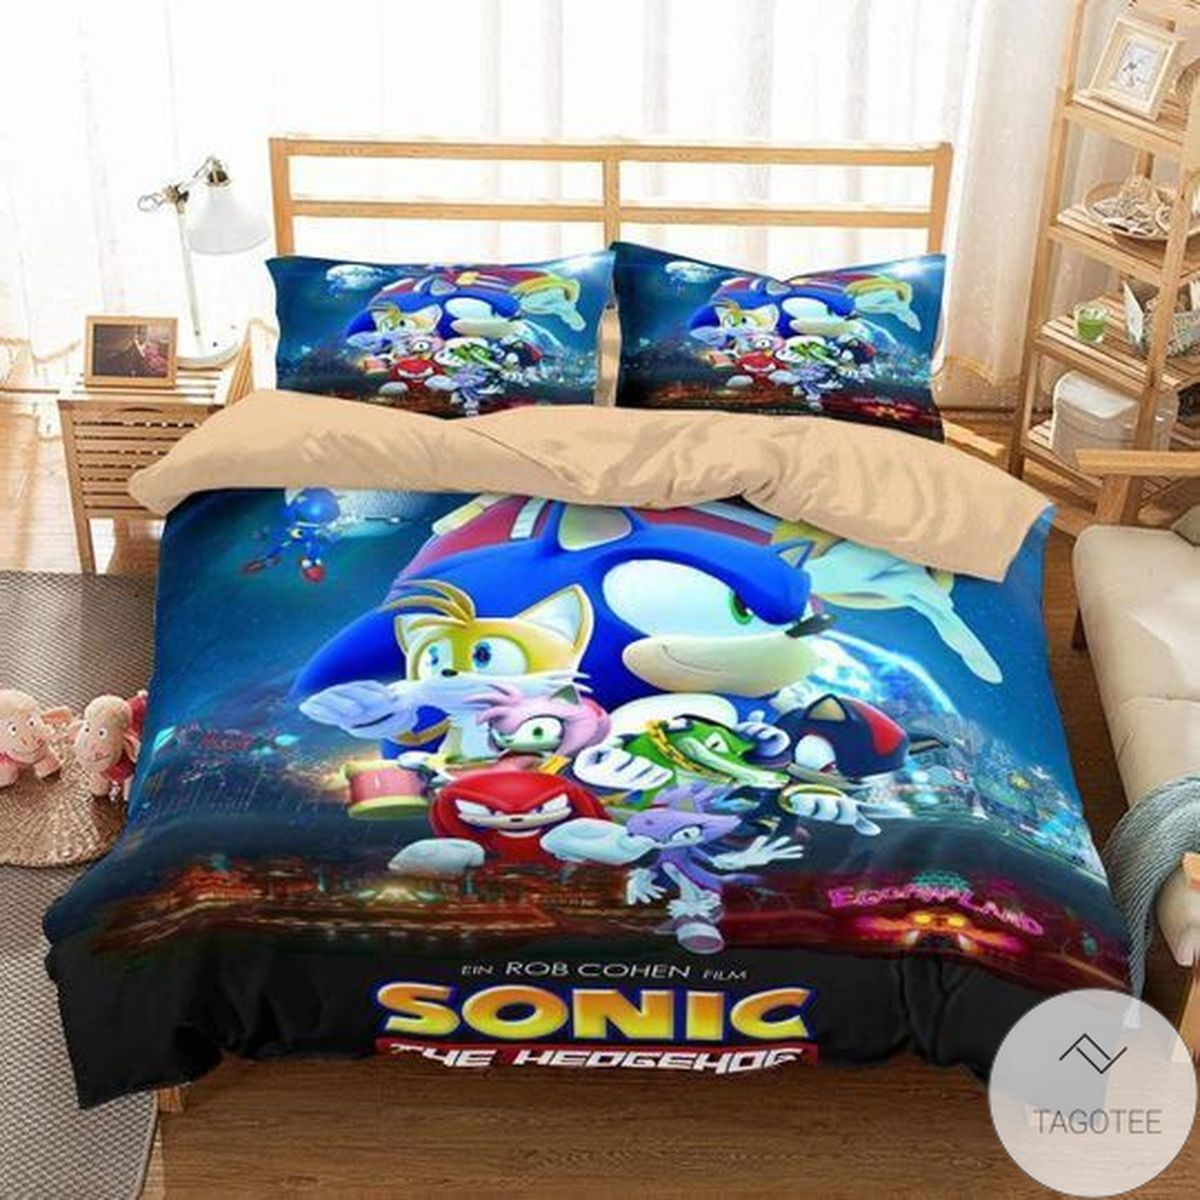 Sonic The Hedgehog Movie Bedding Set